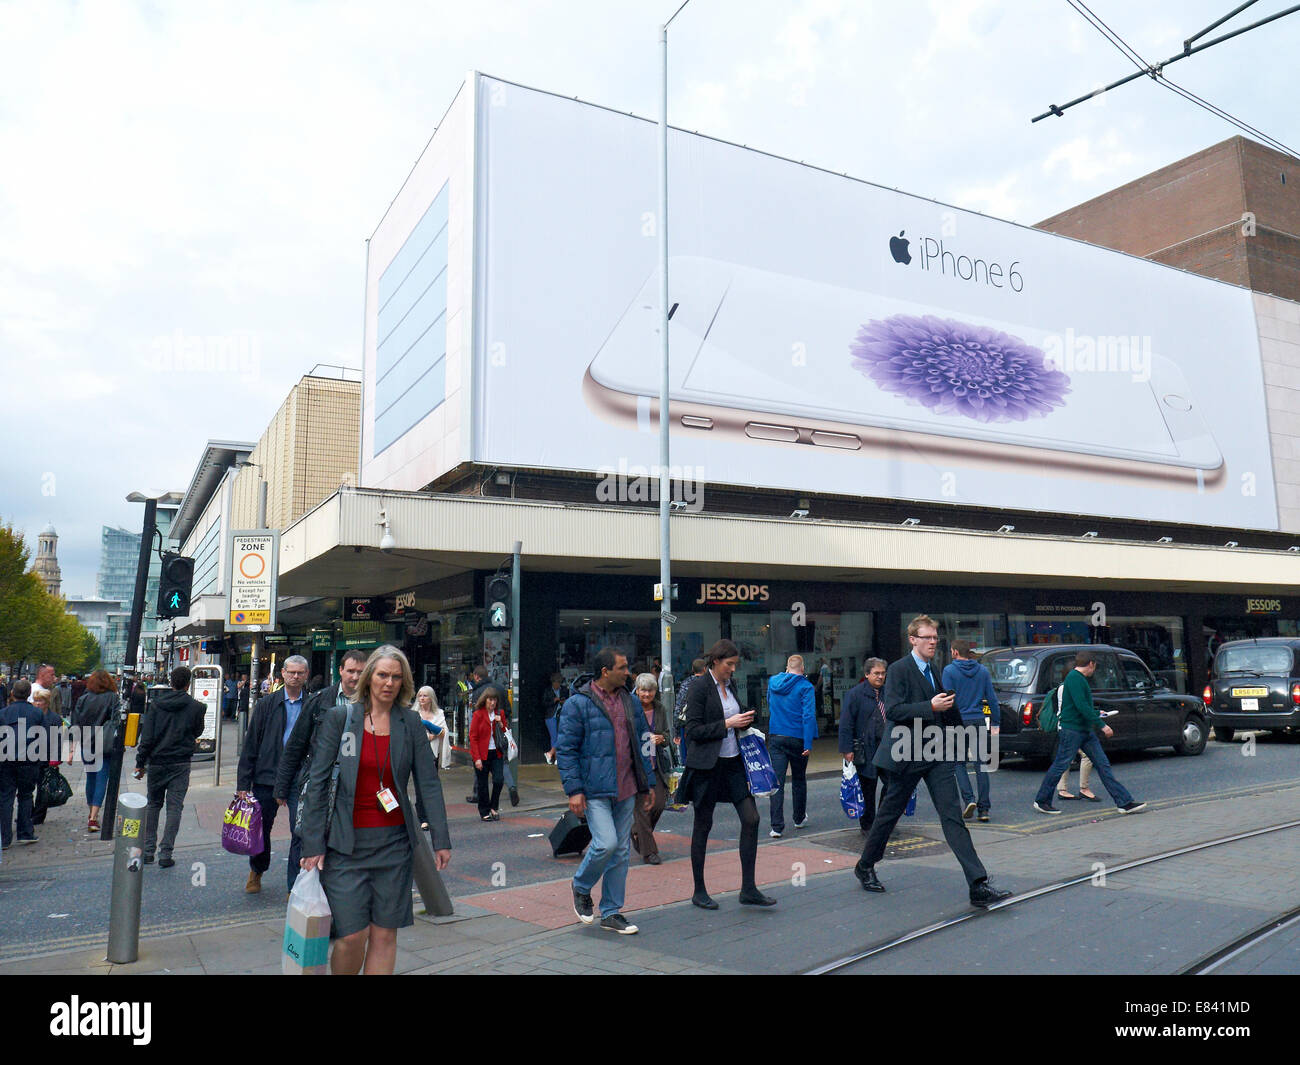 Apple iPhone 6 billboard in Manchester UK Stock Photo